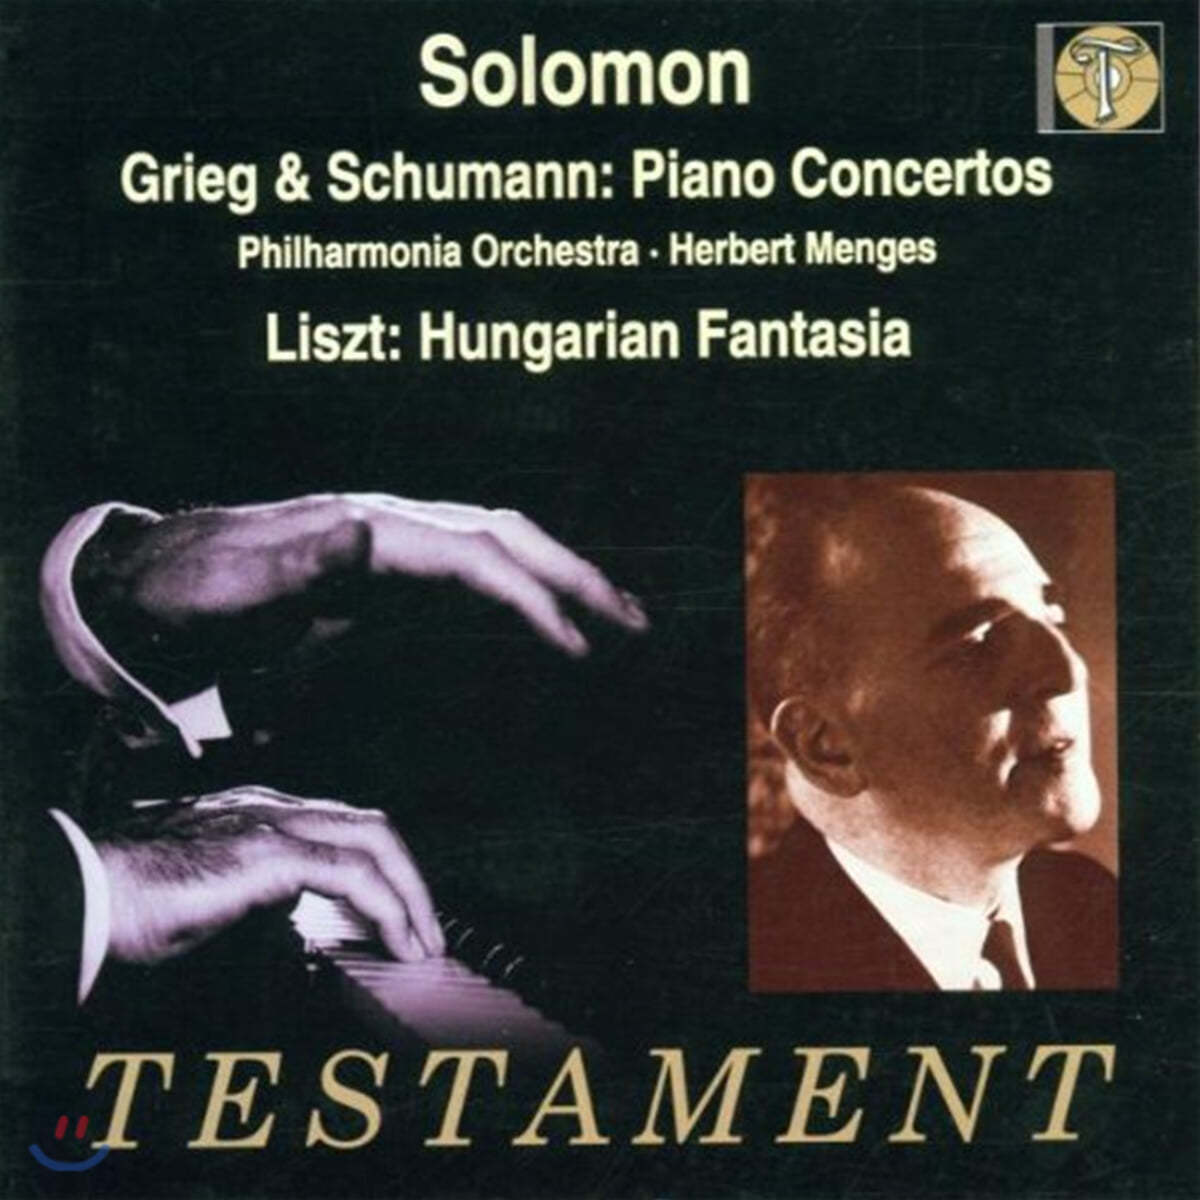 Solomon 그리그 / 슈만: 피아노 협주곡 (Grieg / Schumann: Piano Concertos) 